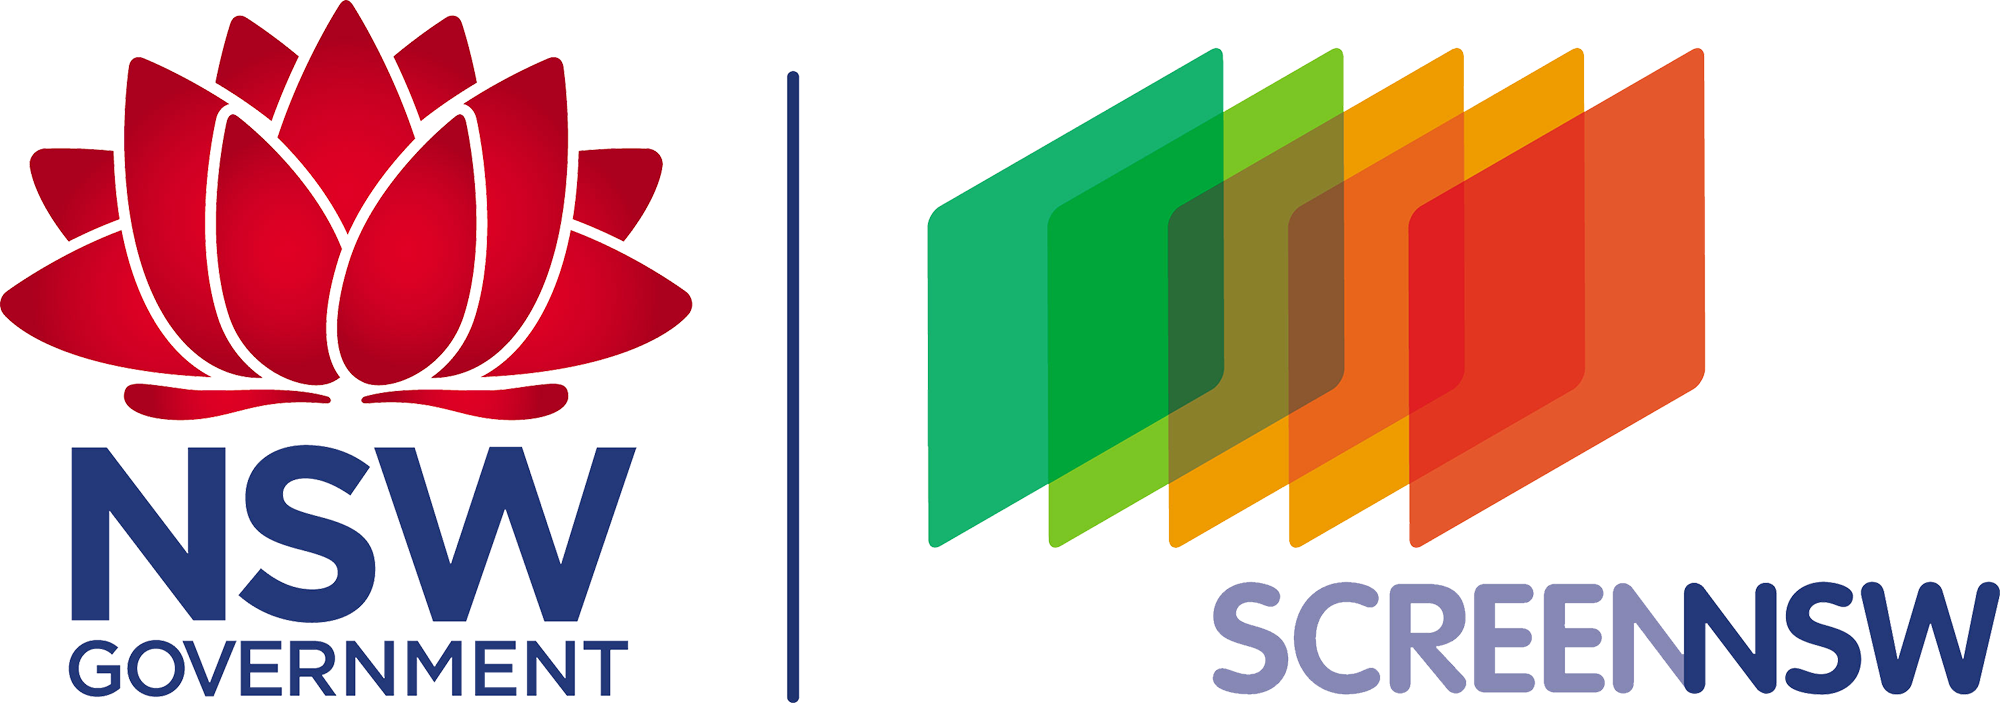 Screen NSW - company